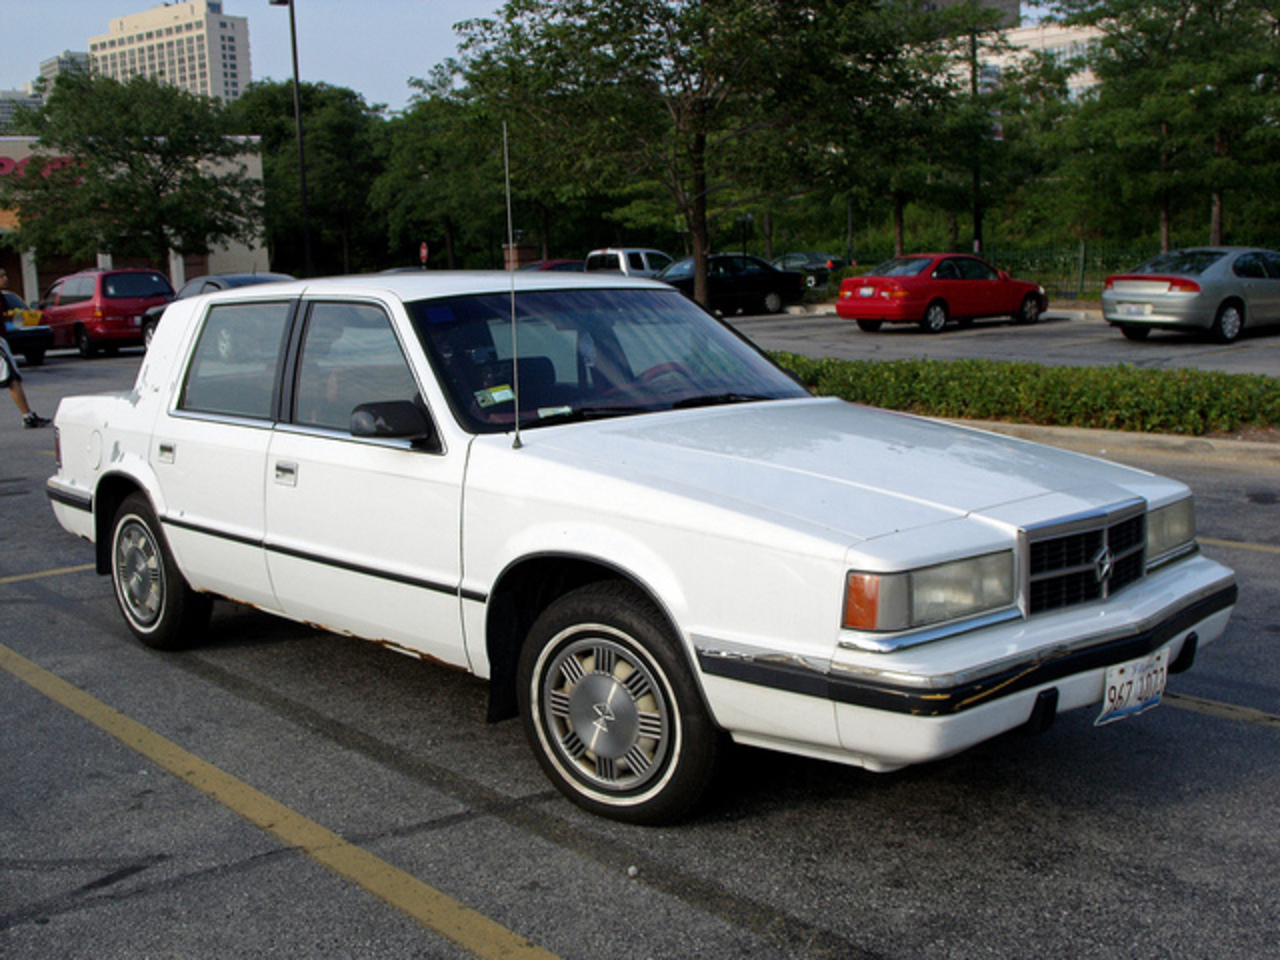 1989 Dodge Dynasty | Flickr - Photo Sharing!